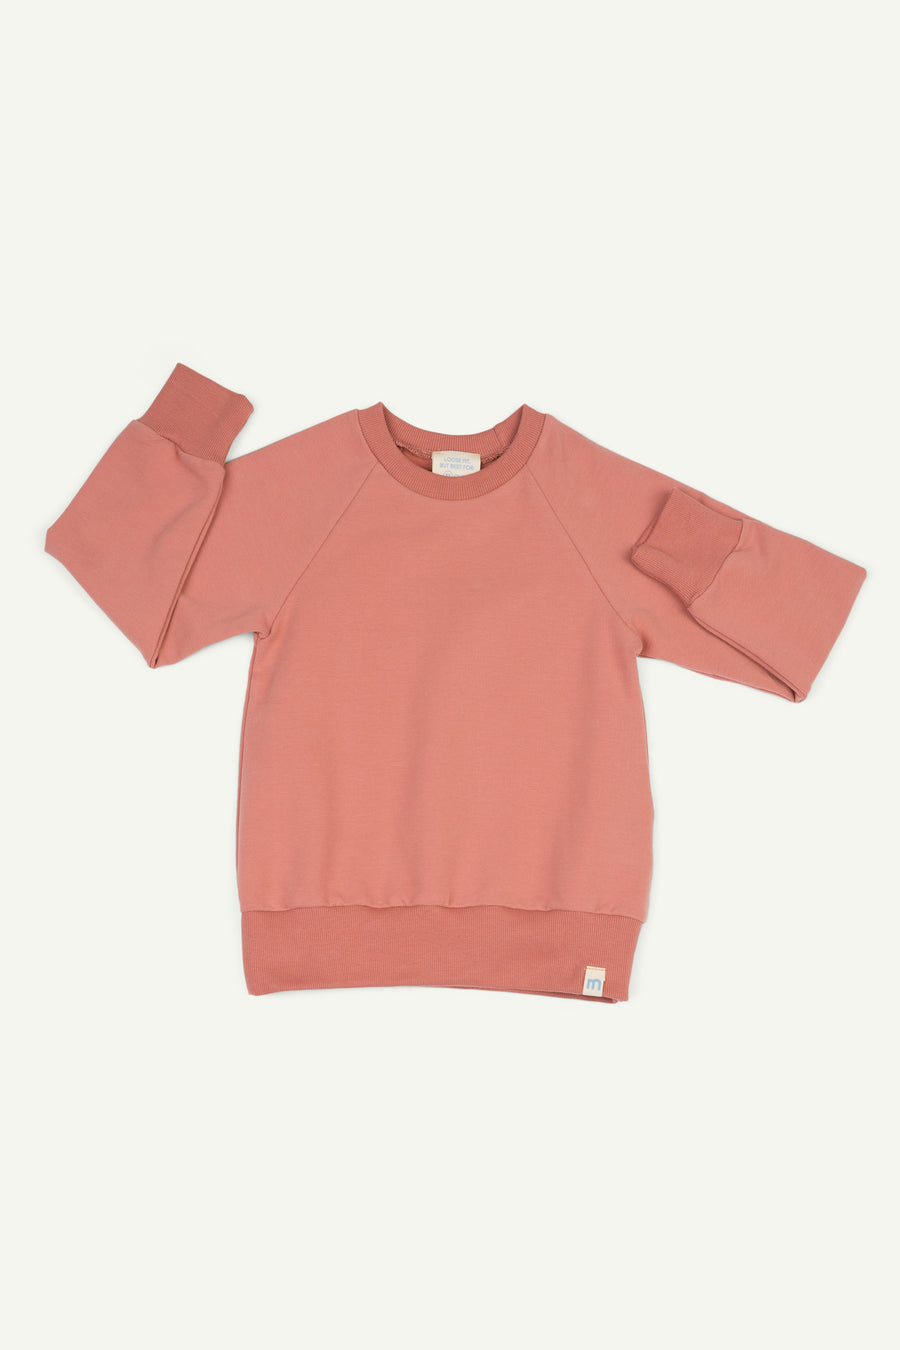 pink jumper